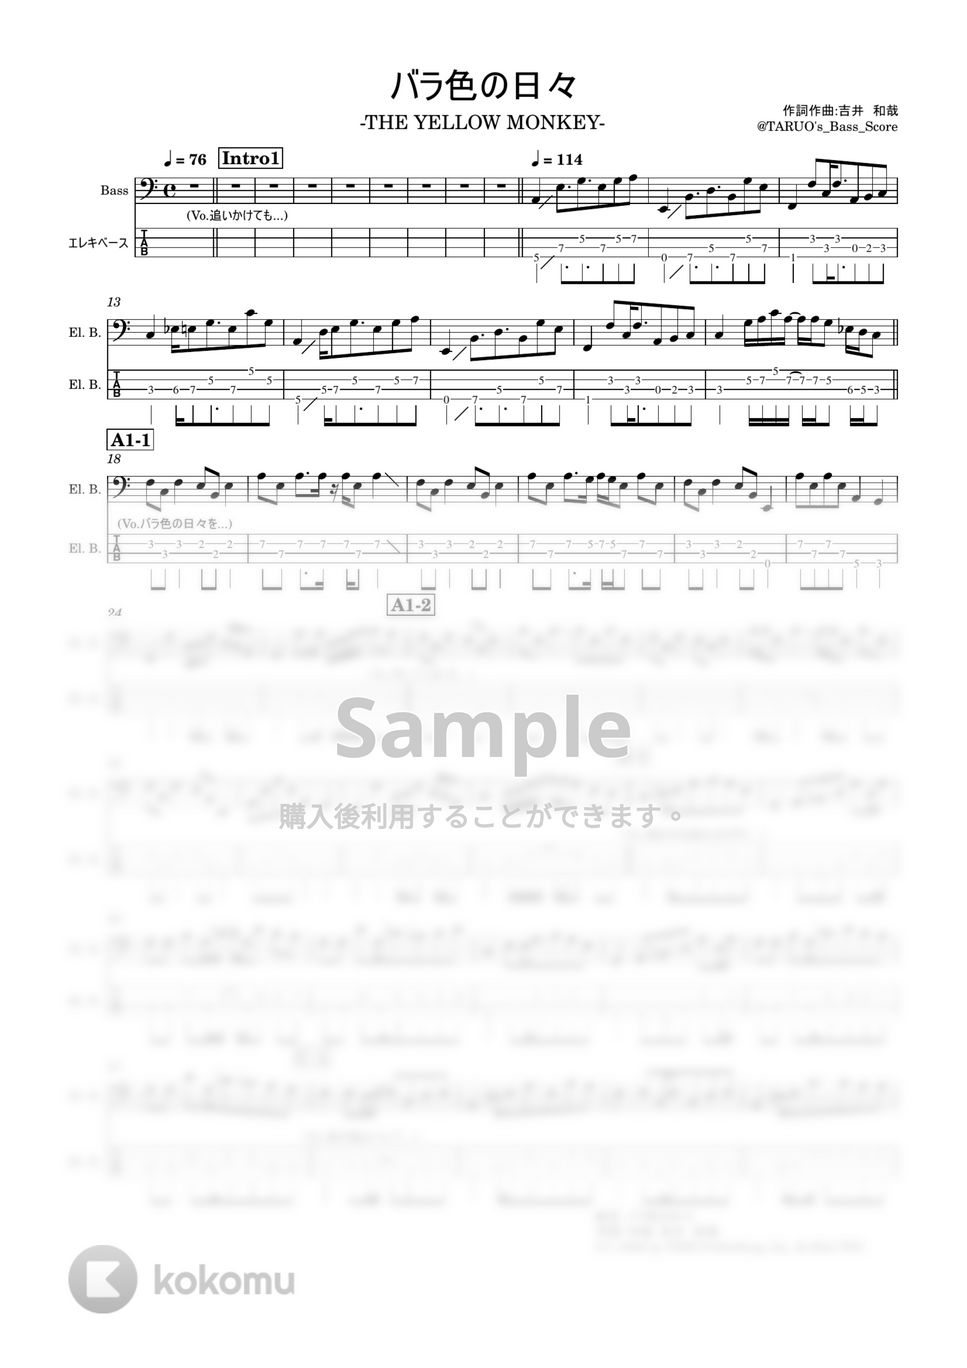 THE YELLOW MONKEY - バラ色の日々 (ベース/TAB/THE YELLOW MONKEY) by TARUO's_Bass_Score